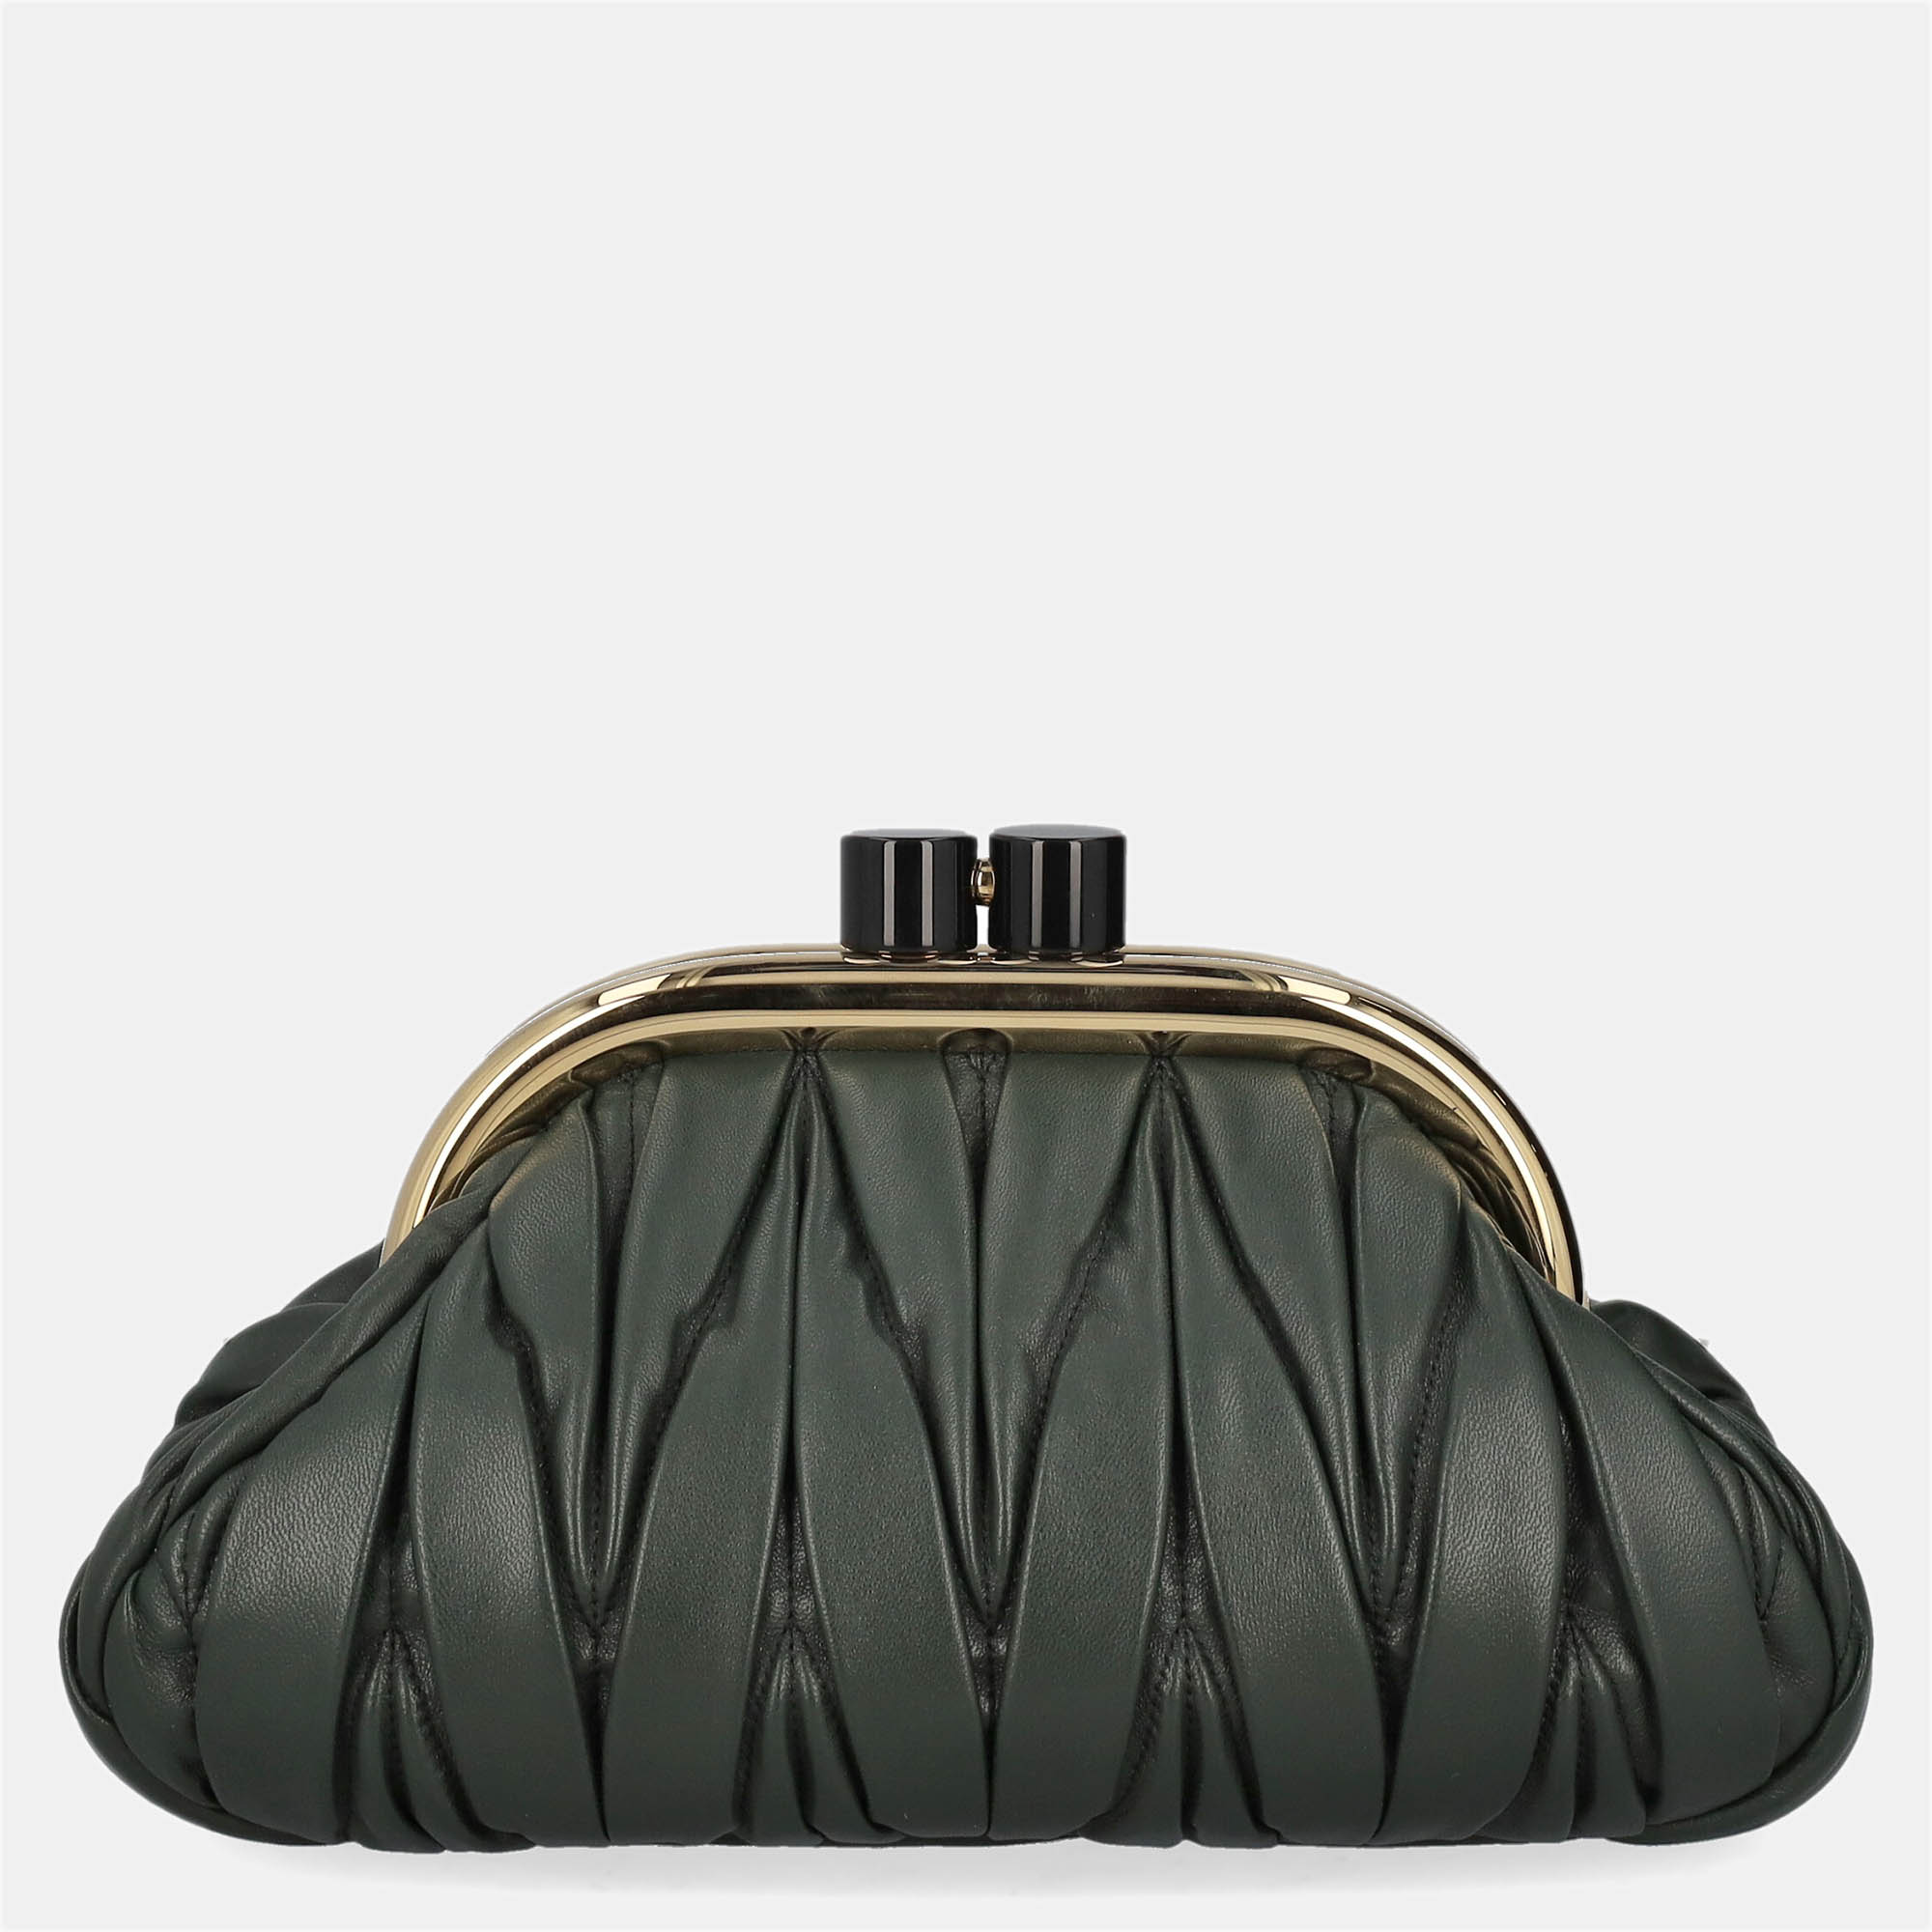 Miu Miu  Women's Leather Clutch Bag - Green - One Size